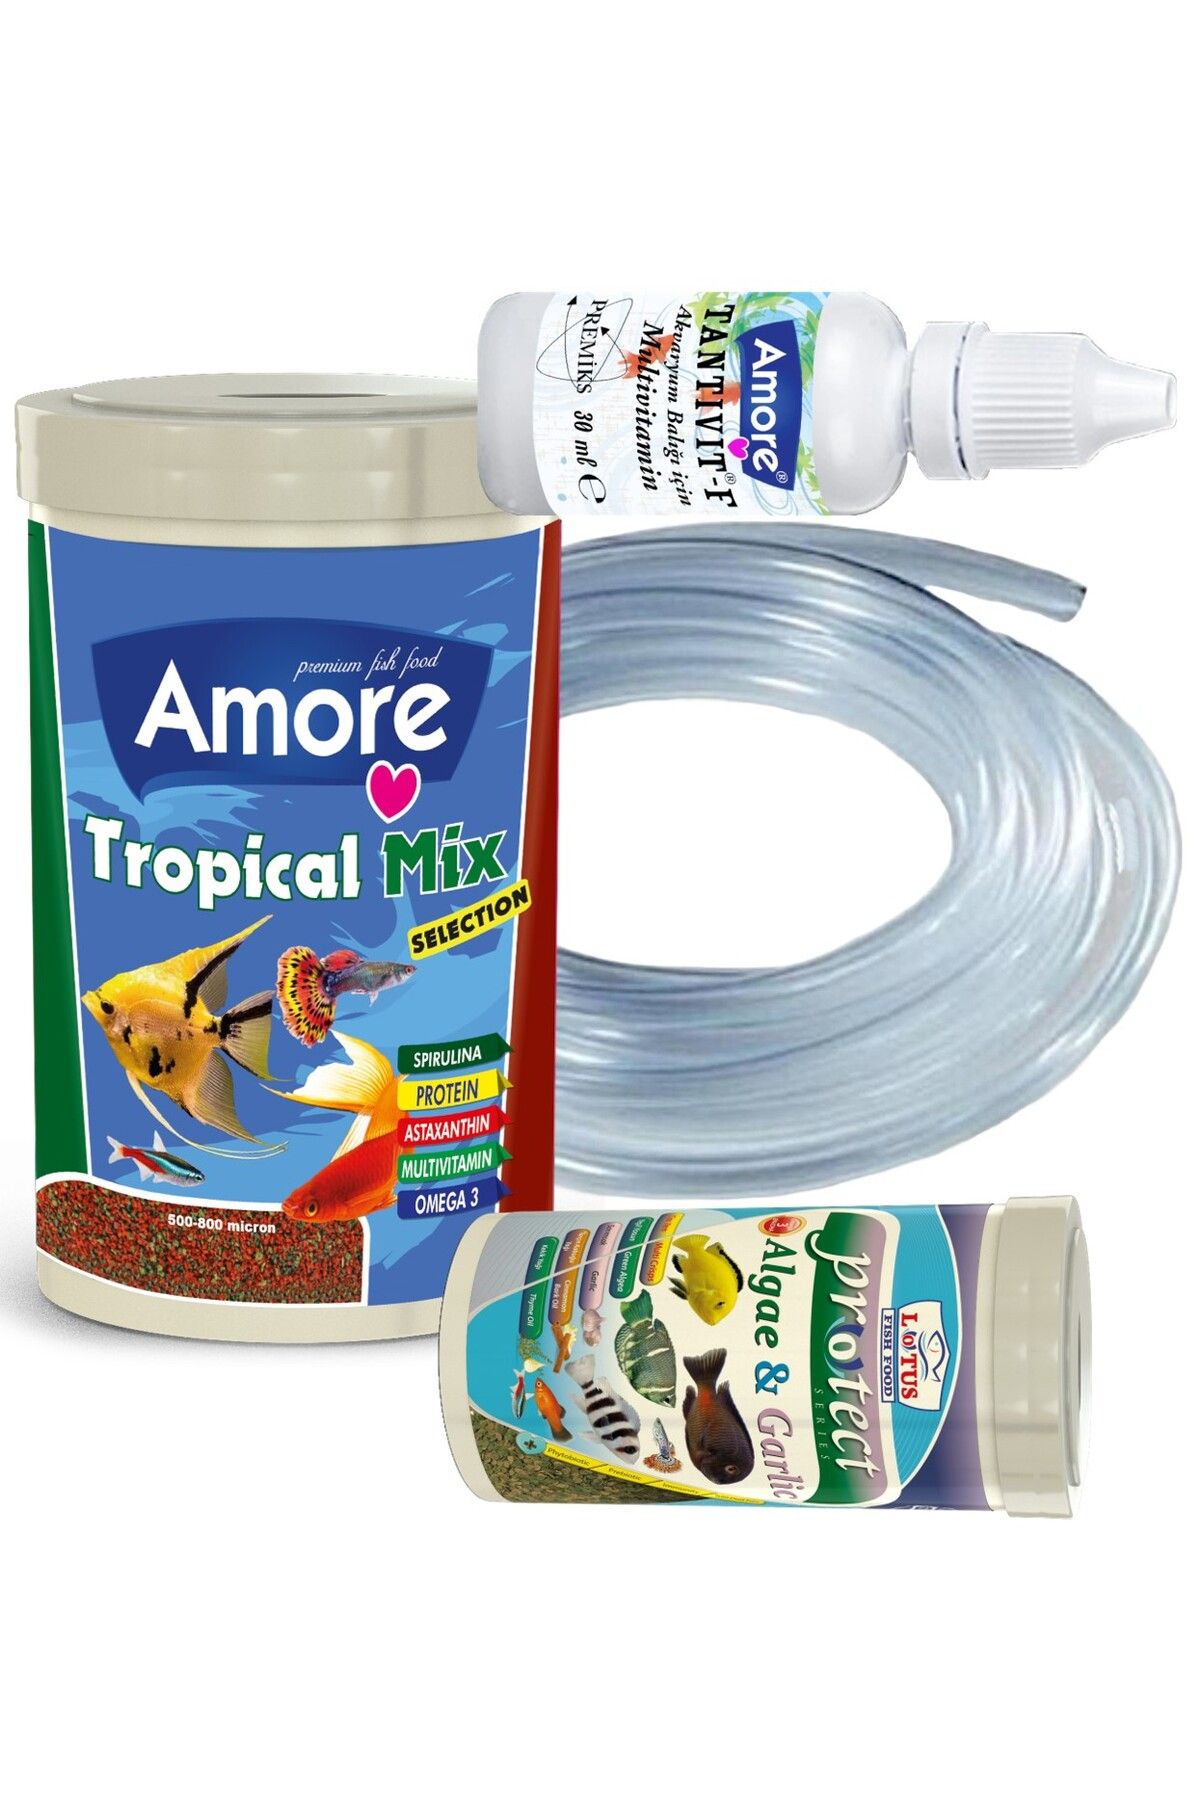 Amore Tropical Mix Selection 1000ml, Algae Garlic 100ml Balık Yemi, Hava Hortumu, Multivitamin